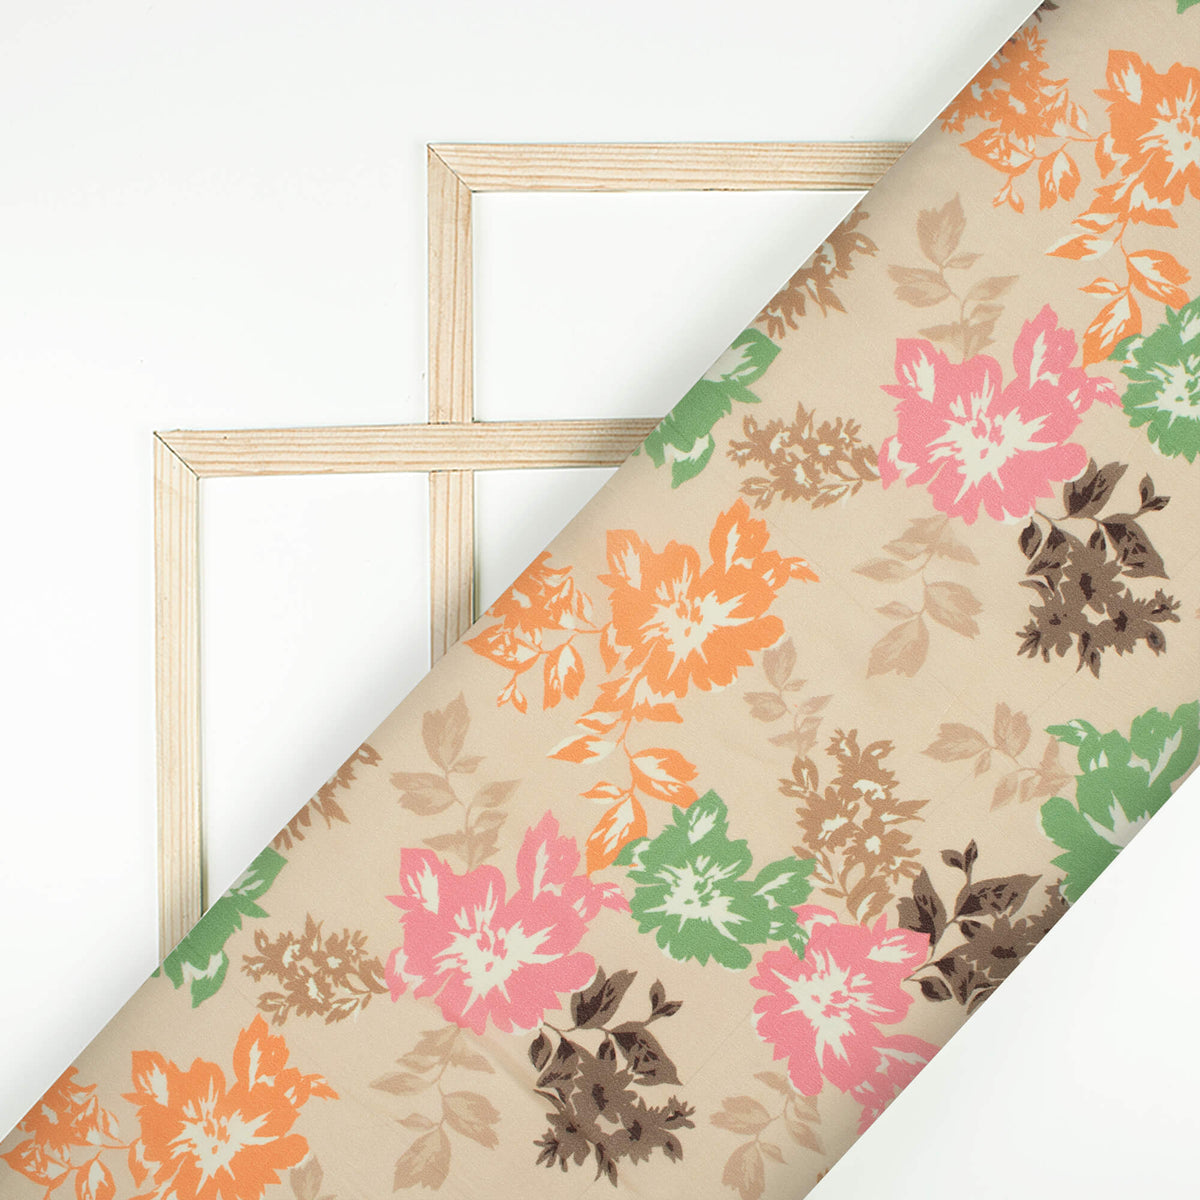 Artichock Green And Thulian Pink Floral Pattern Digital Print Viscose Natural Crepe Fabric